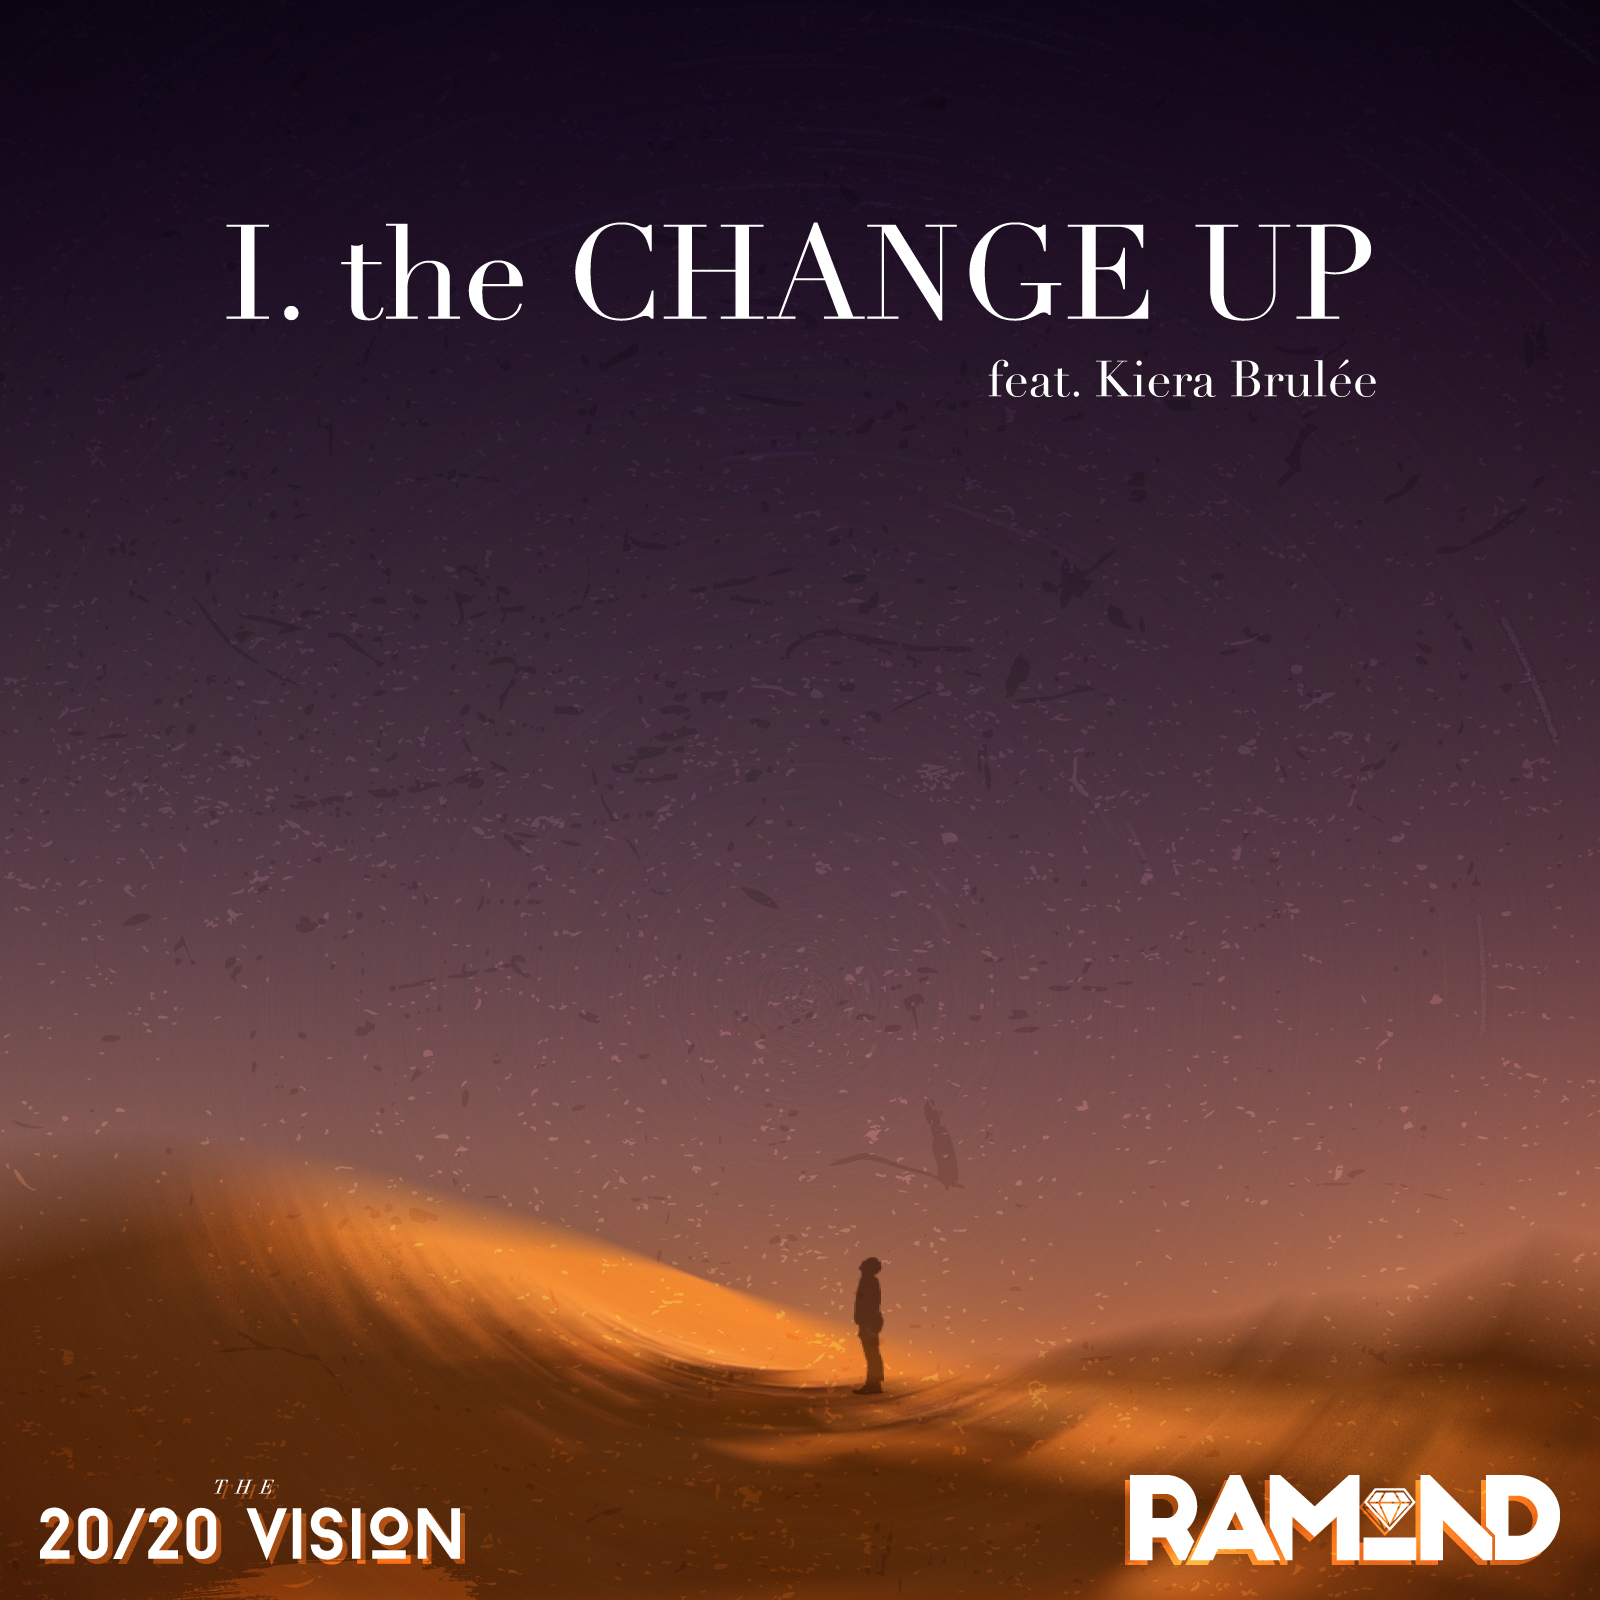 [Premiere] "The Change Up" - Ramond Feat. Kiera Brulee